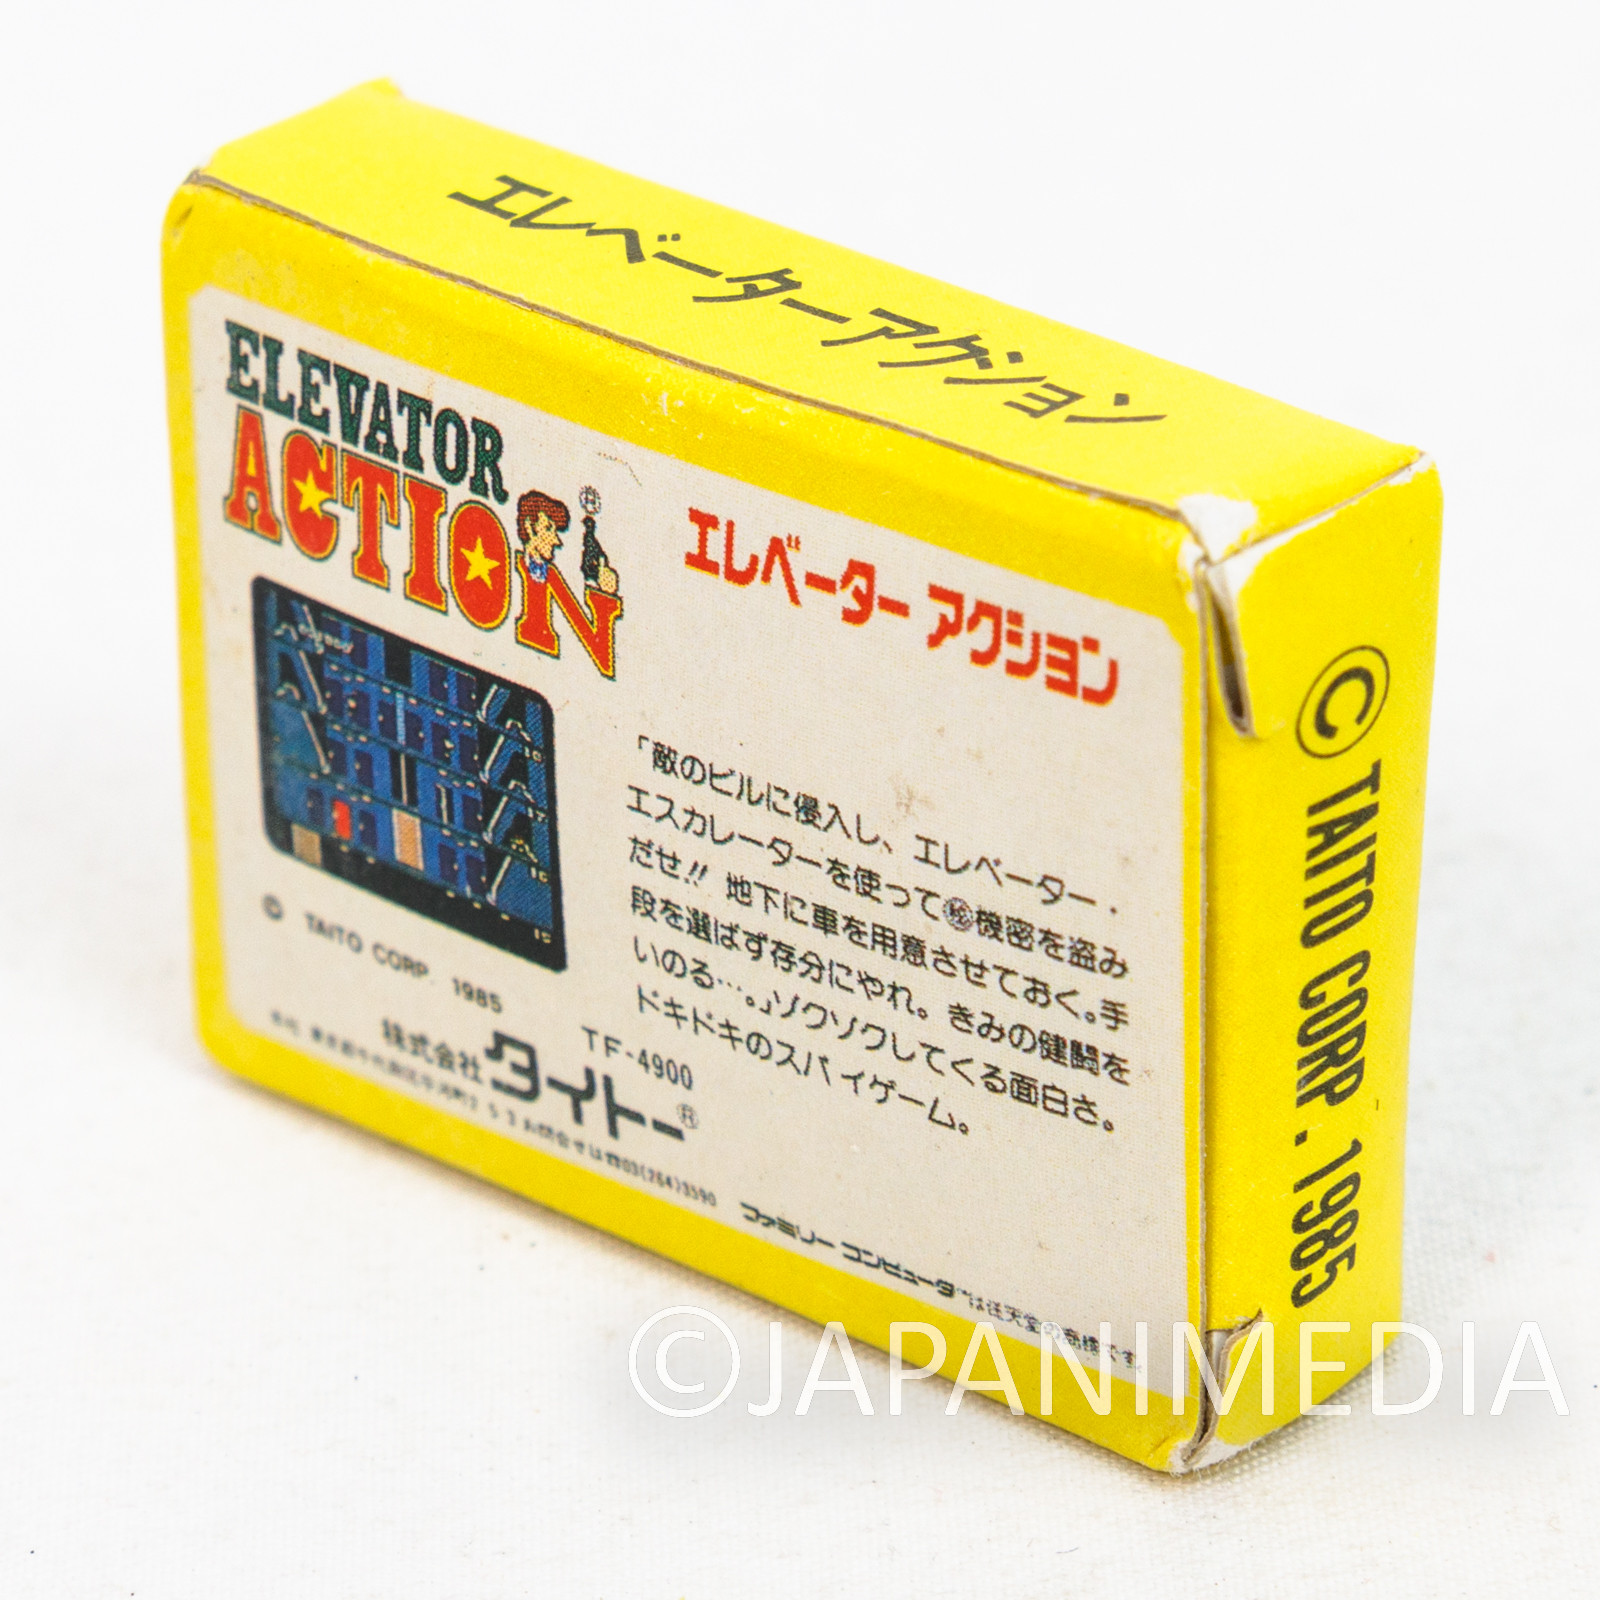 Elevator Action Cassette Mini Eraser AMADA JAPAN TAITO FAMICOM NES Nintendo